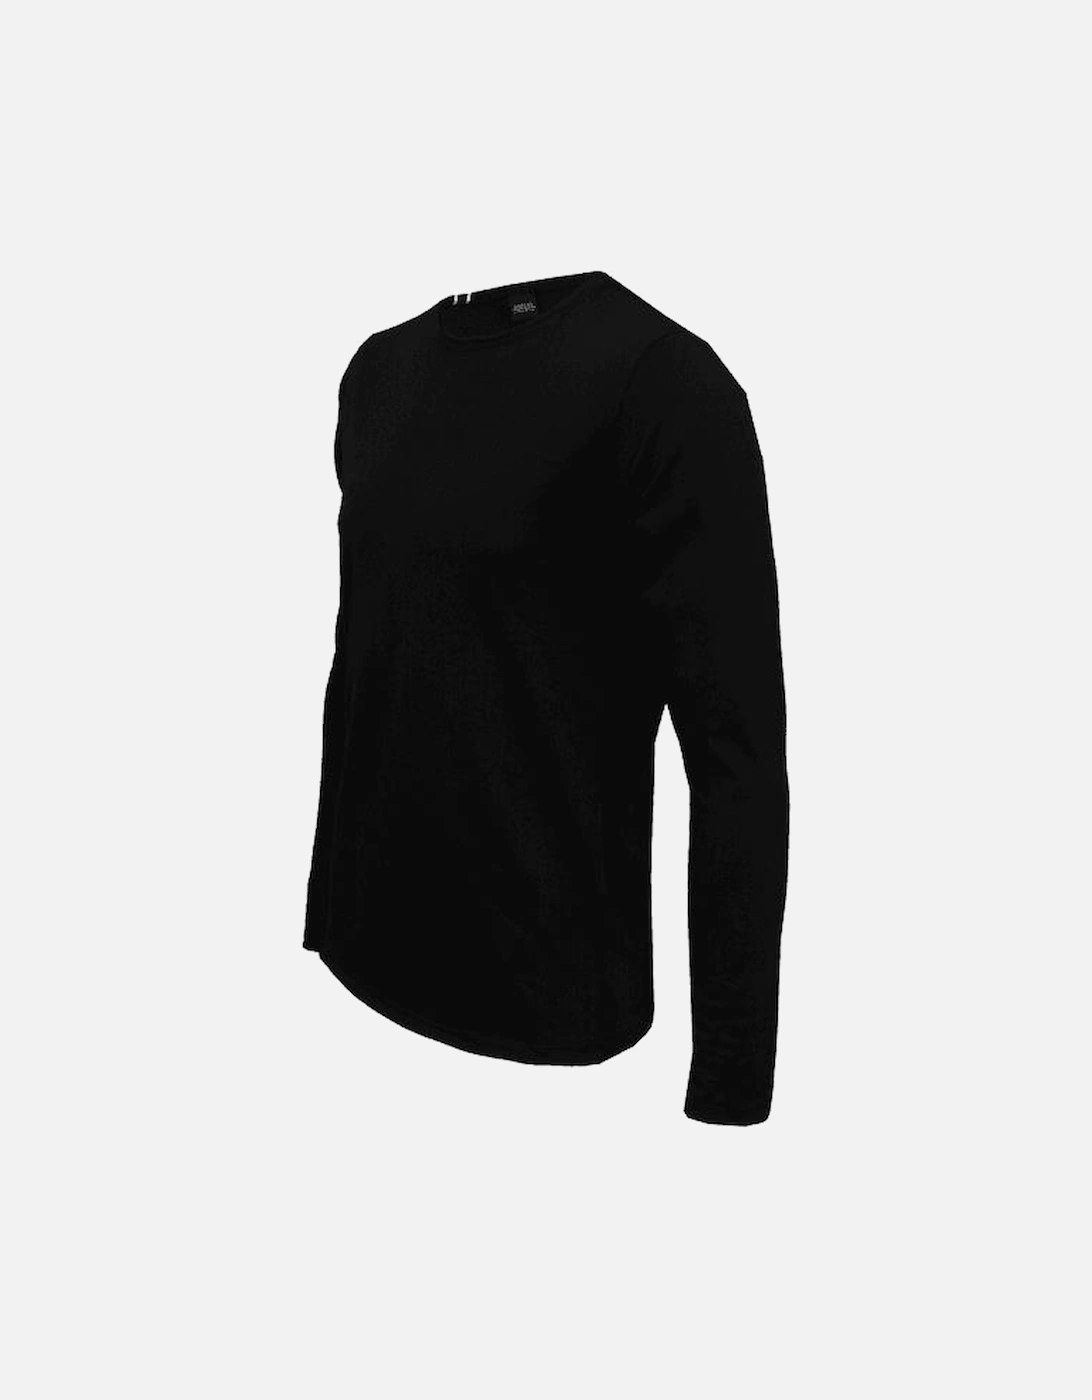 Long-Sleeve Crew-Neck T-Shirt, Black